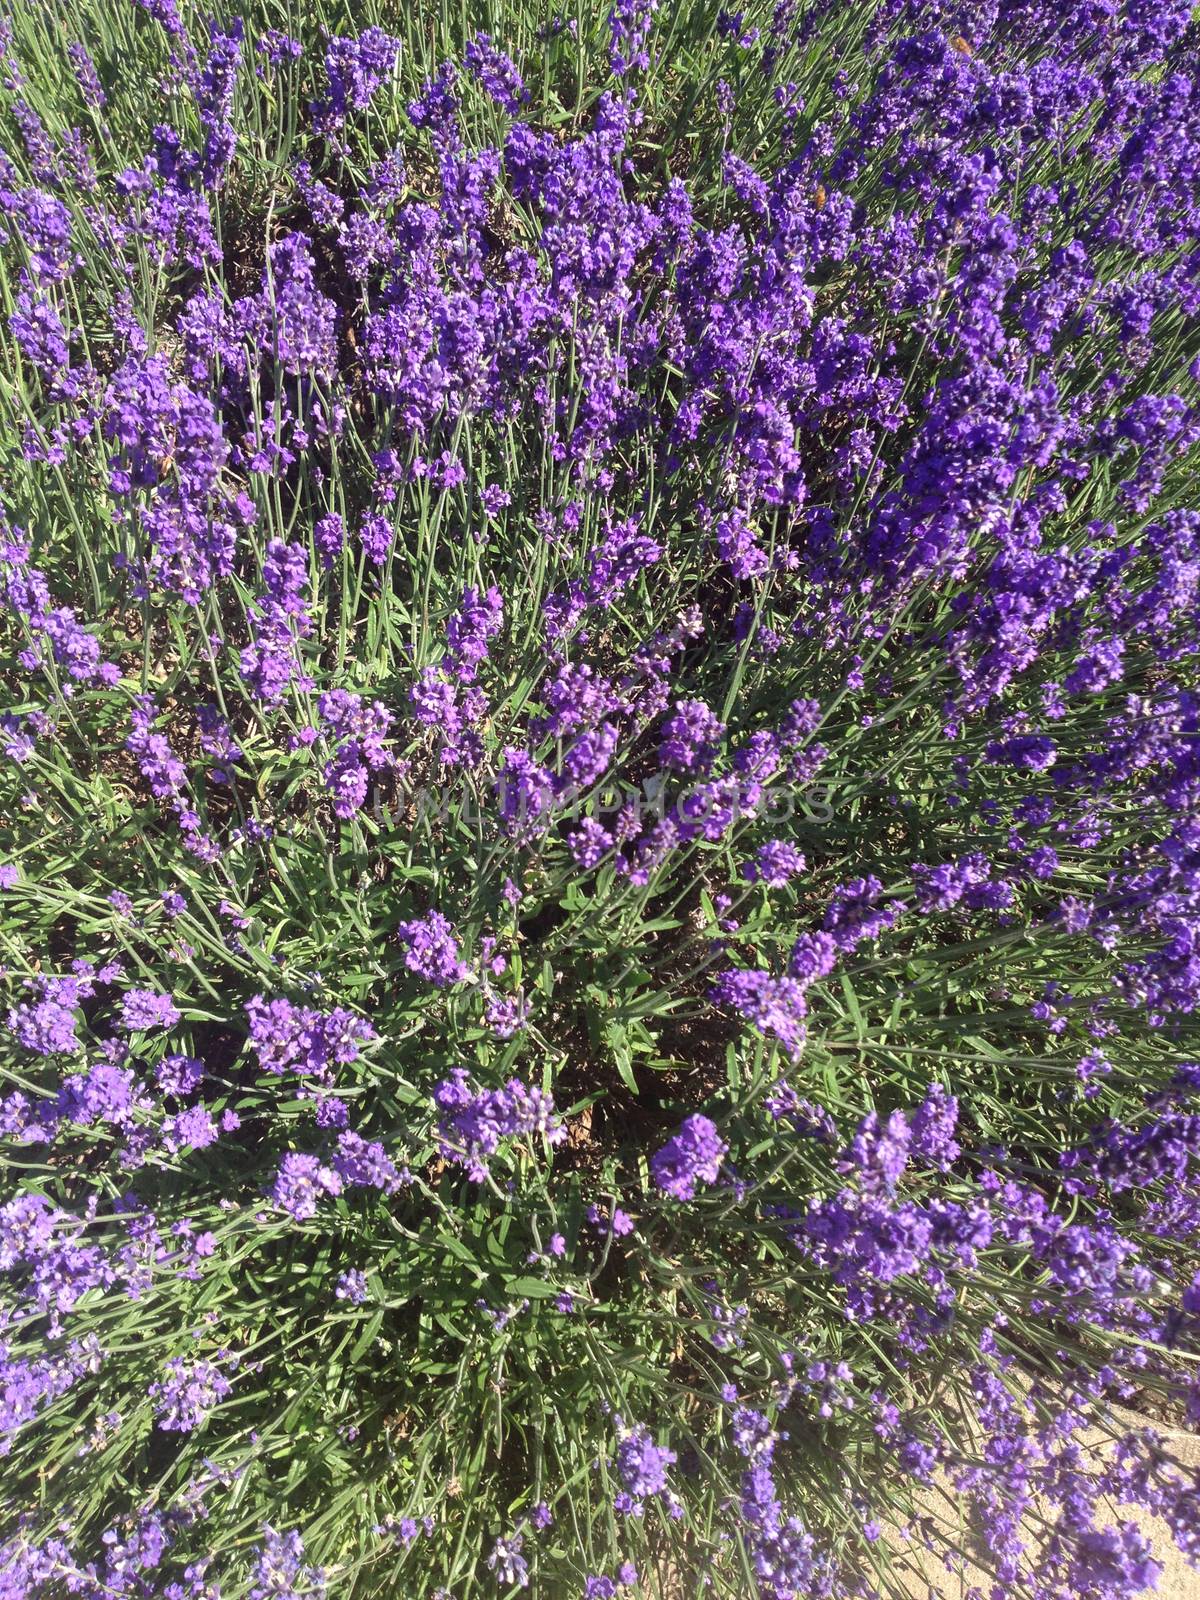 Purple lavender flowers forming a dense bush